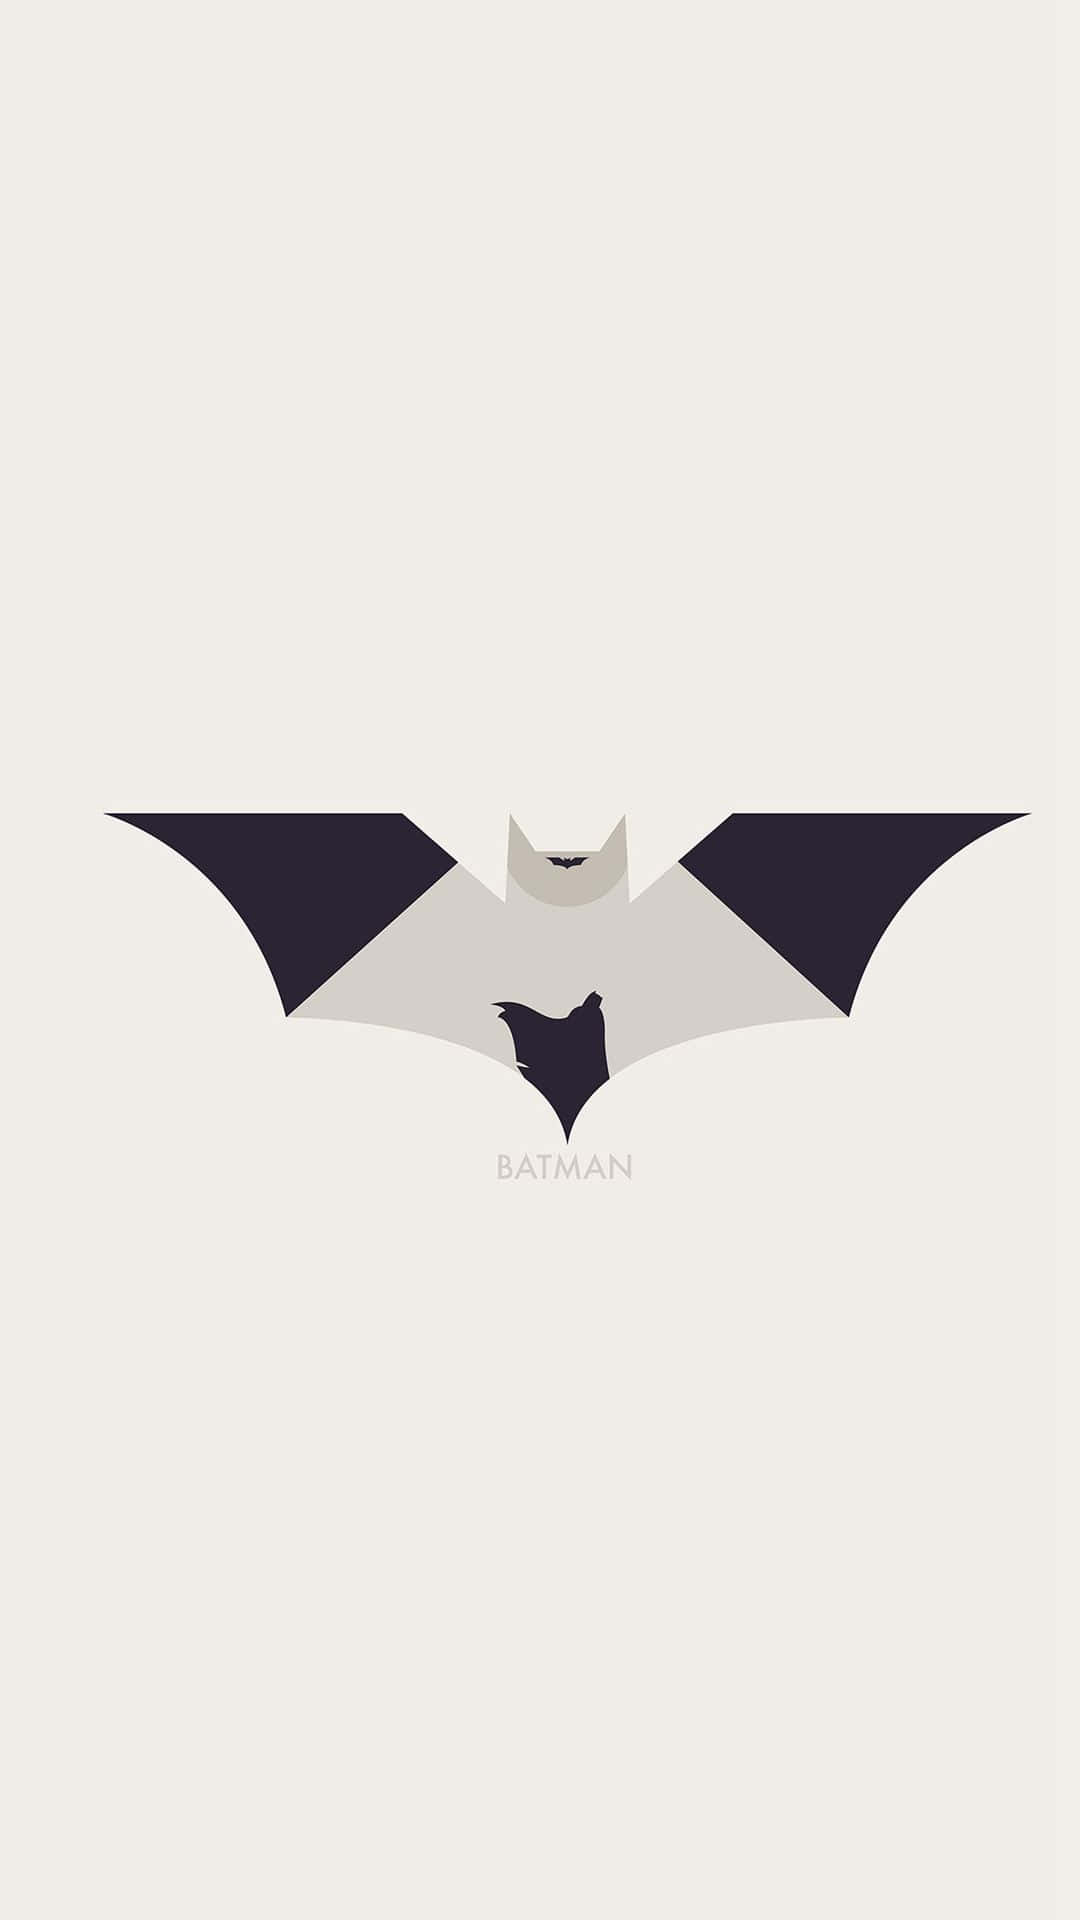 Batman - Batman - Batman - Batman - Batman - Batman - Batman - Batman - Background